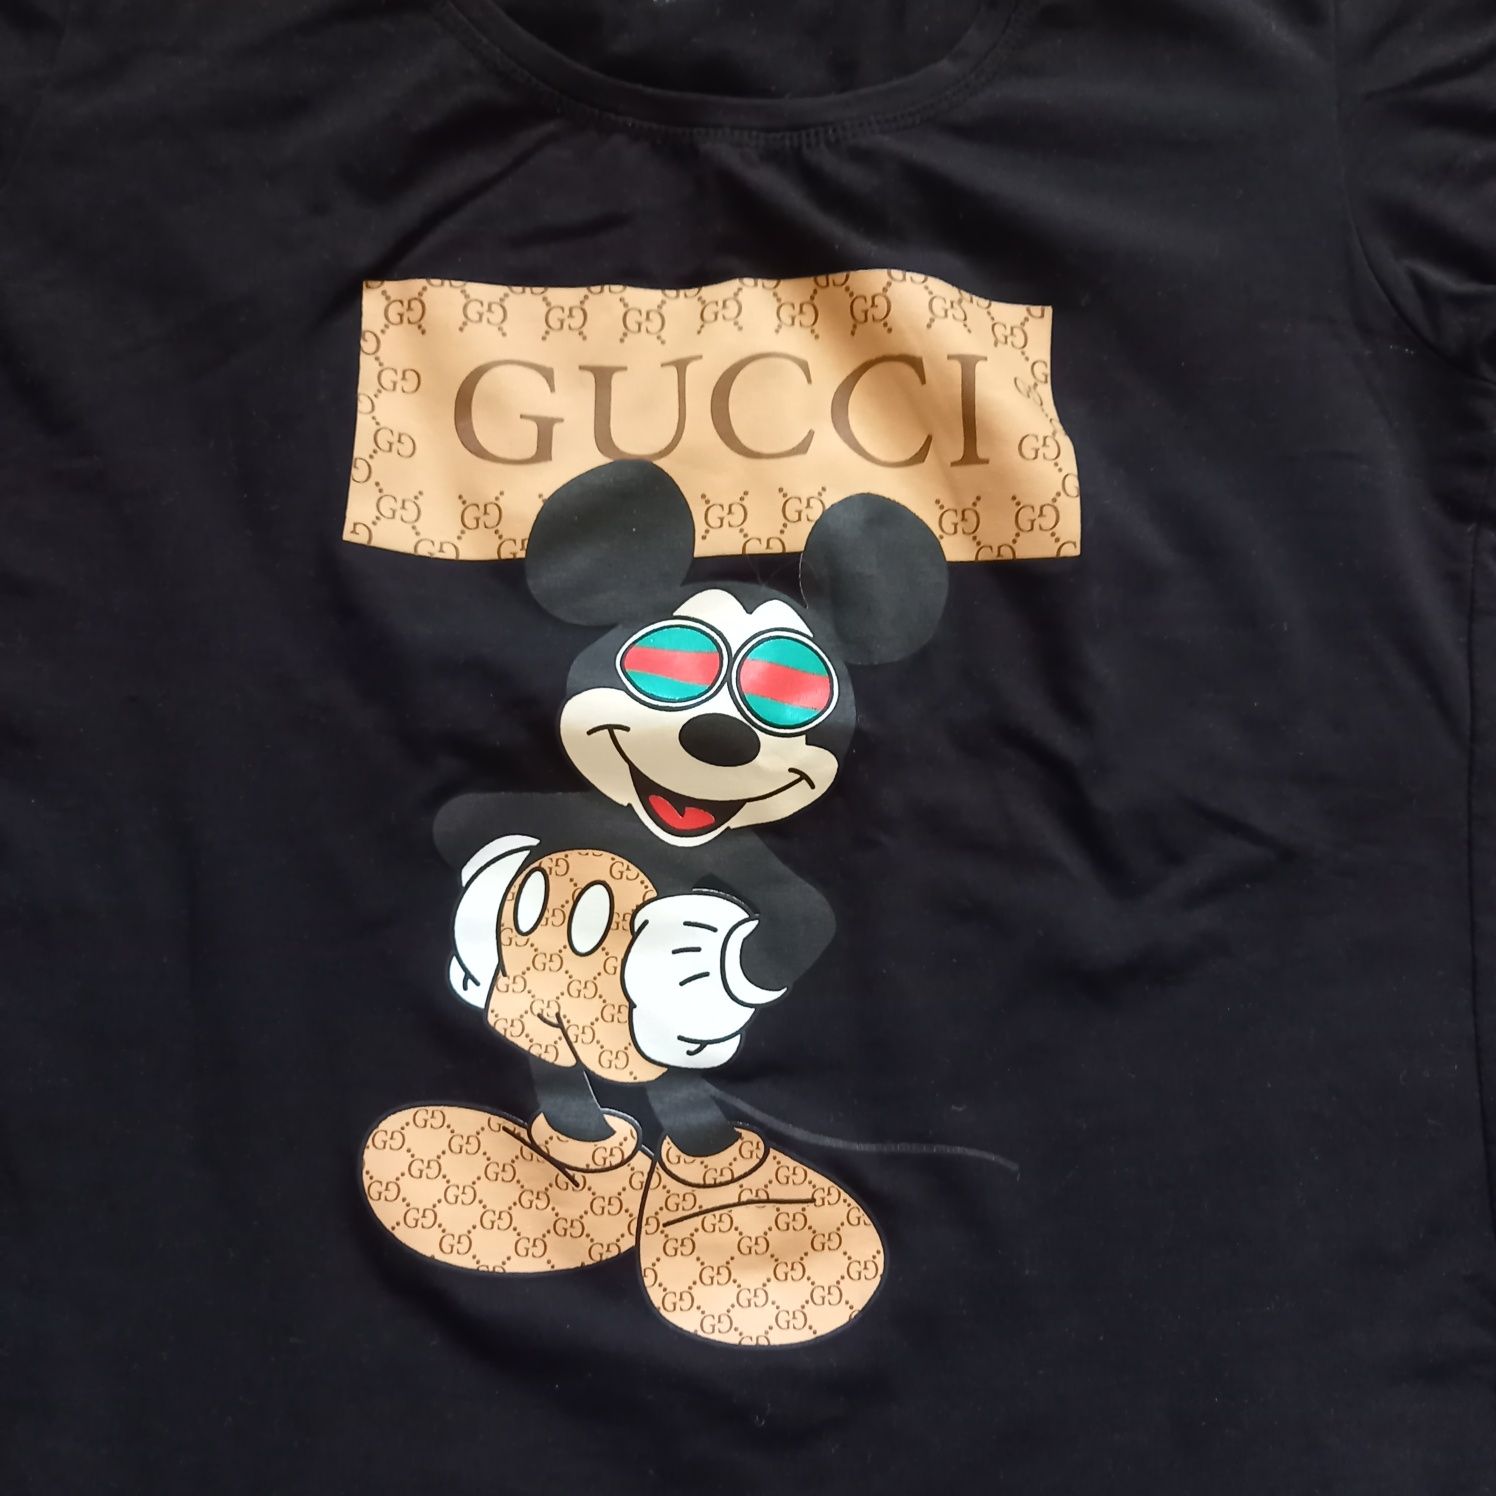 Bluzka Gucci czarna T-shirt elastyczna L Myszka Miki koszulka